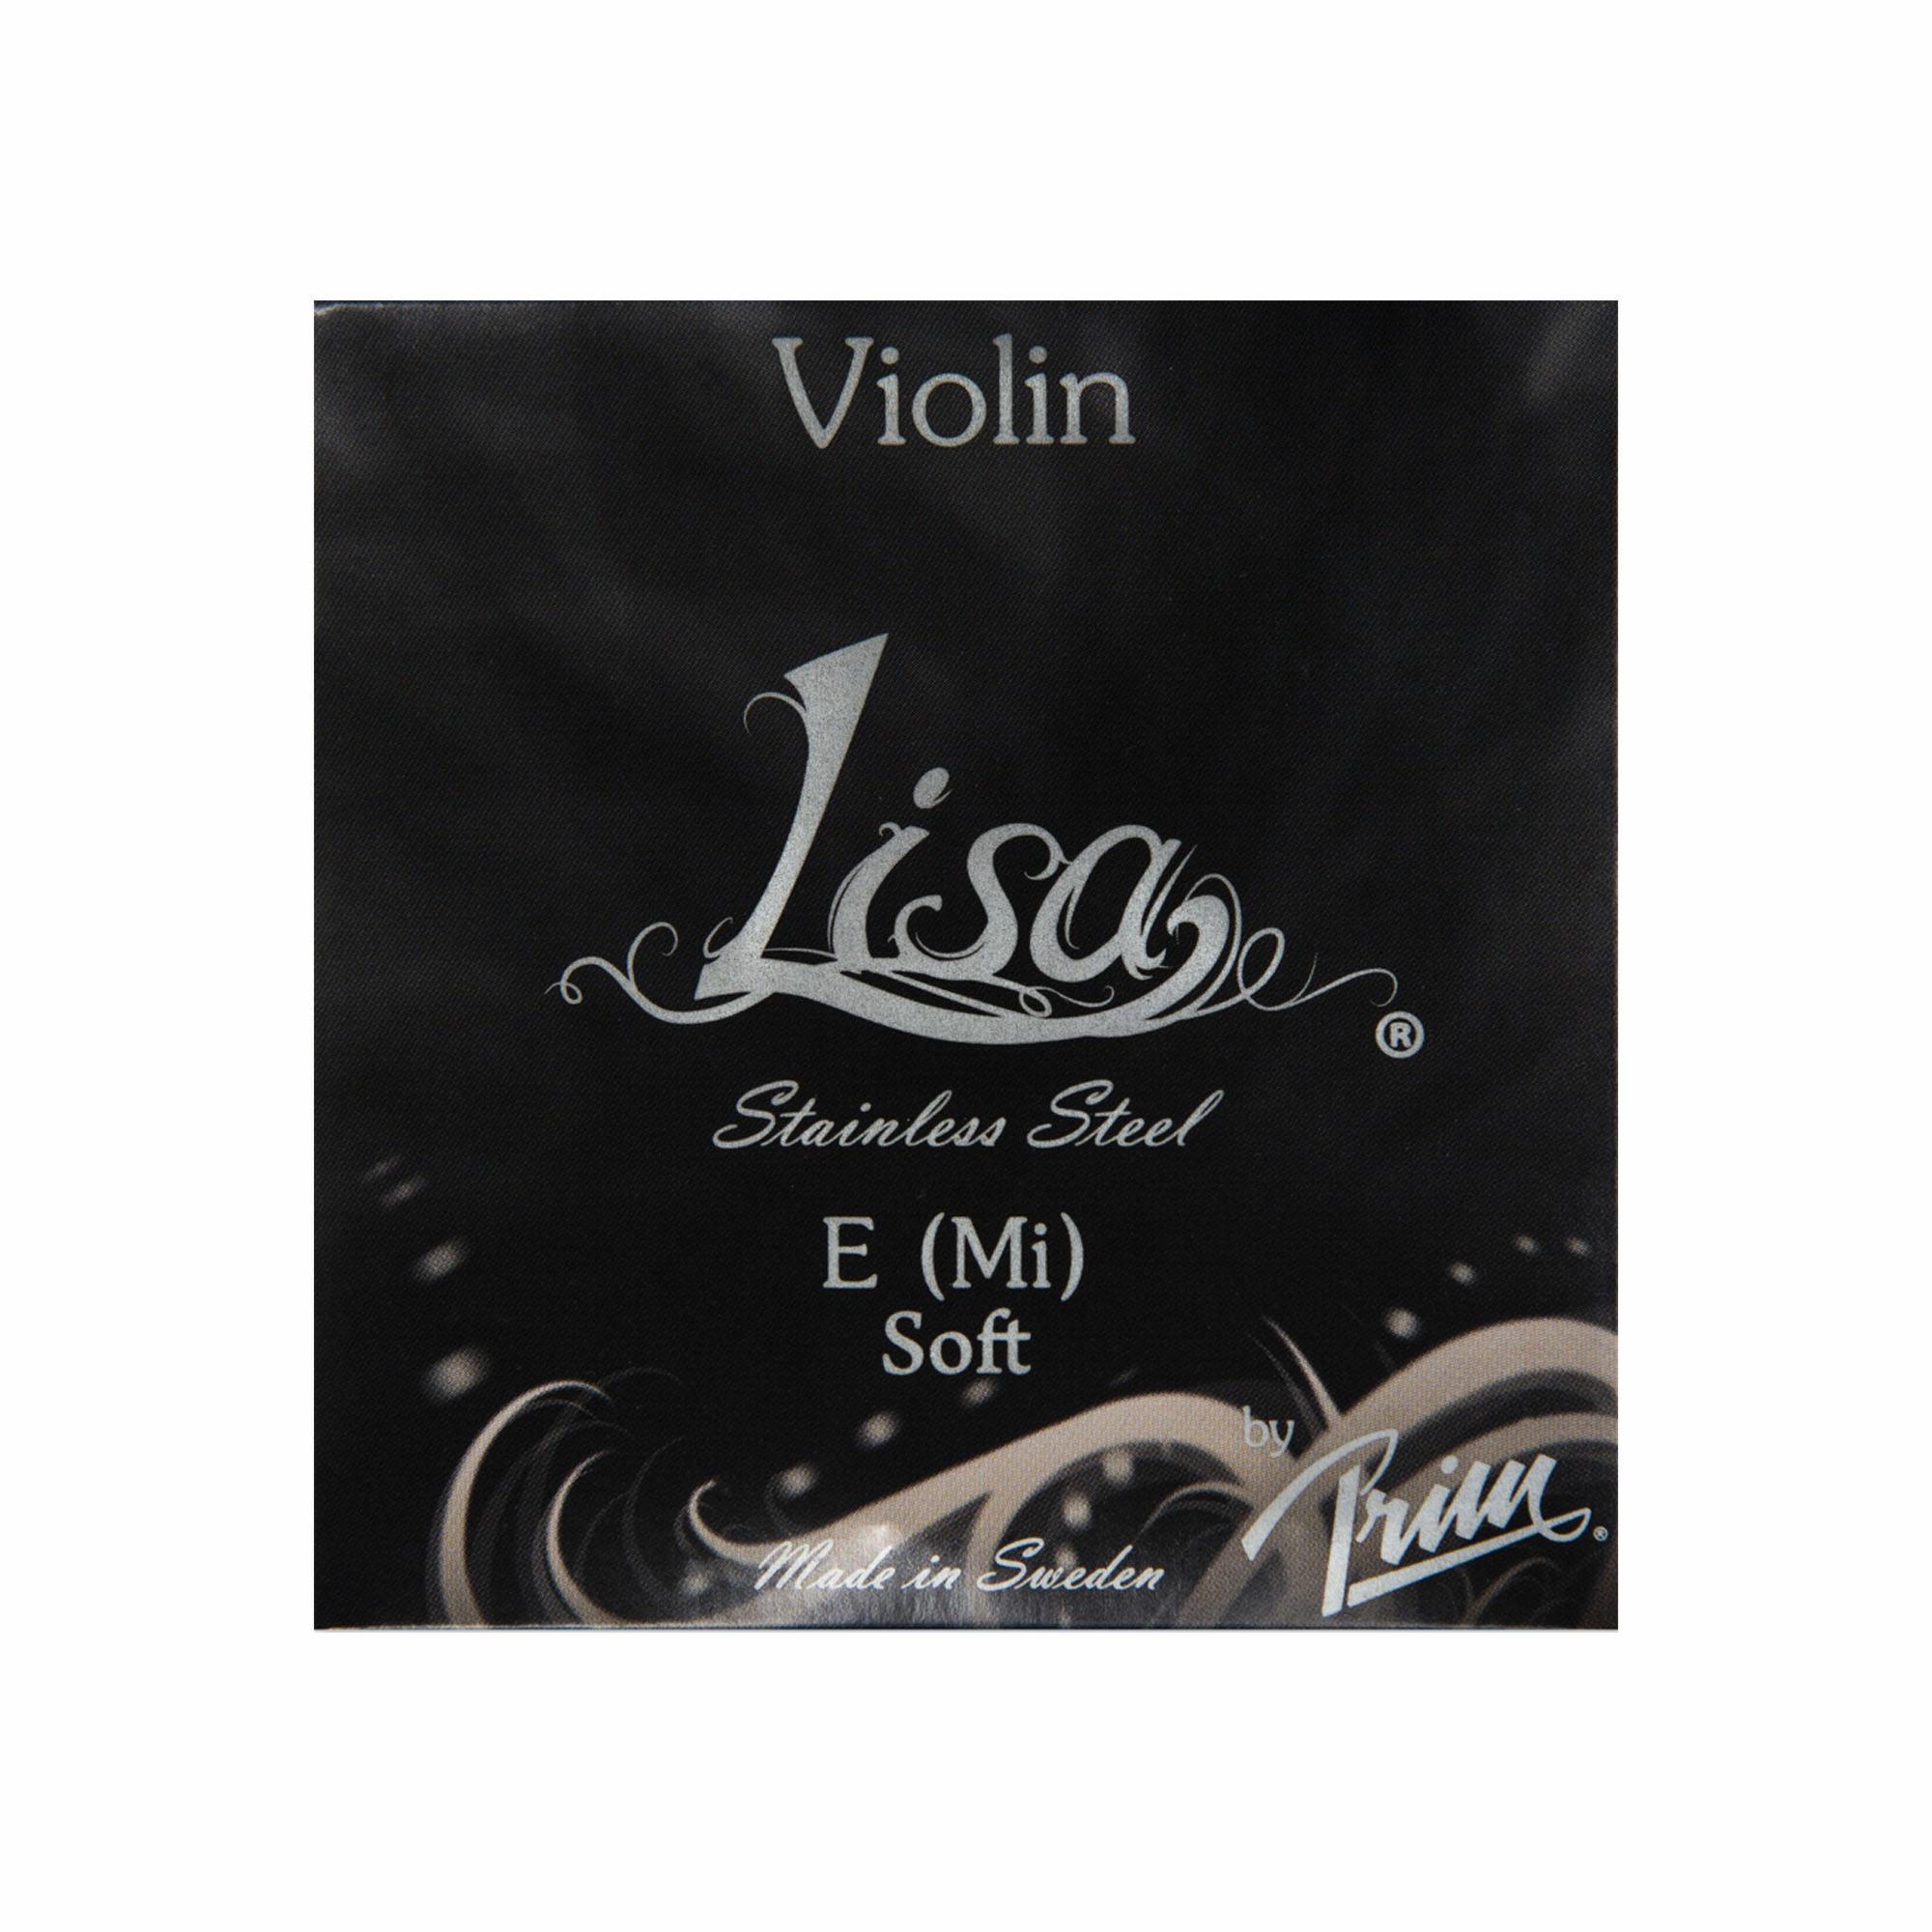 Prim Violin Lisa E String and Sets